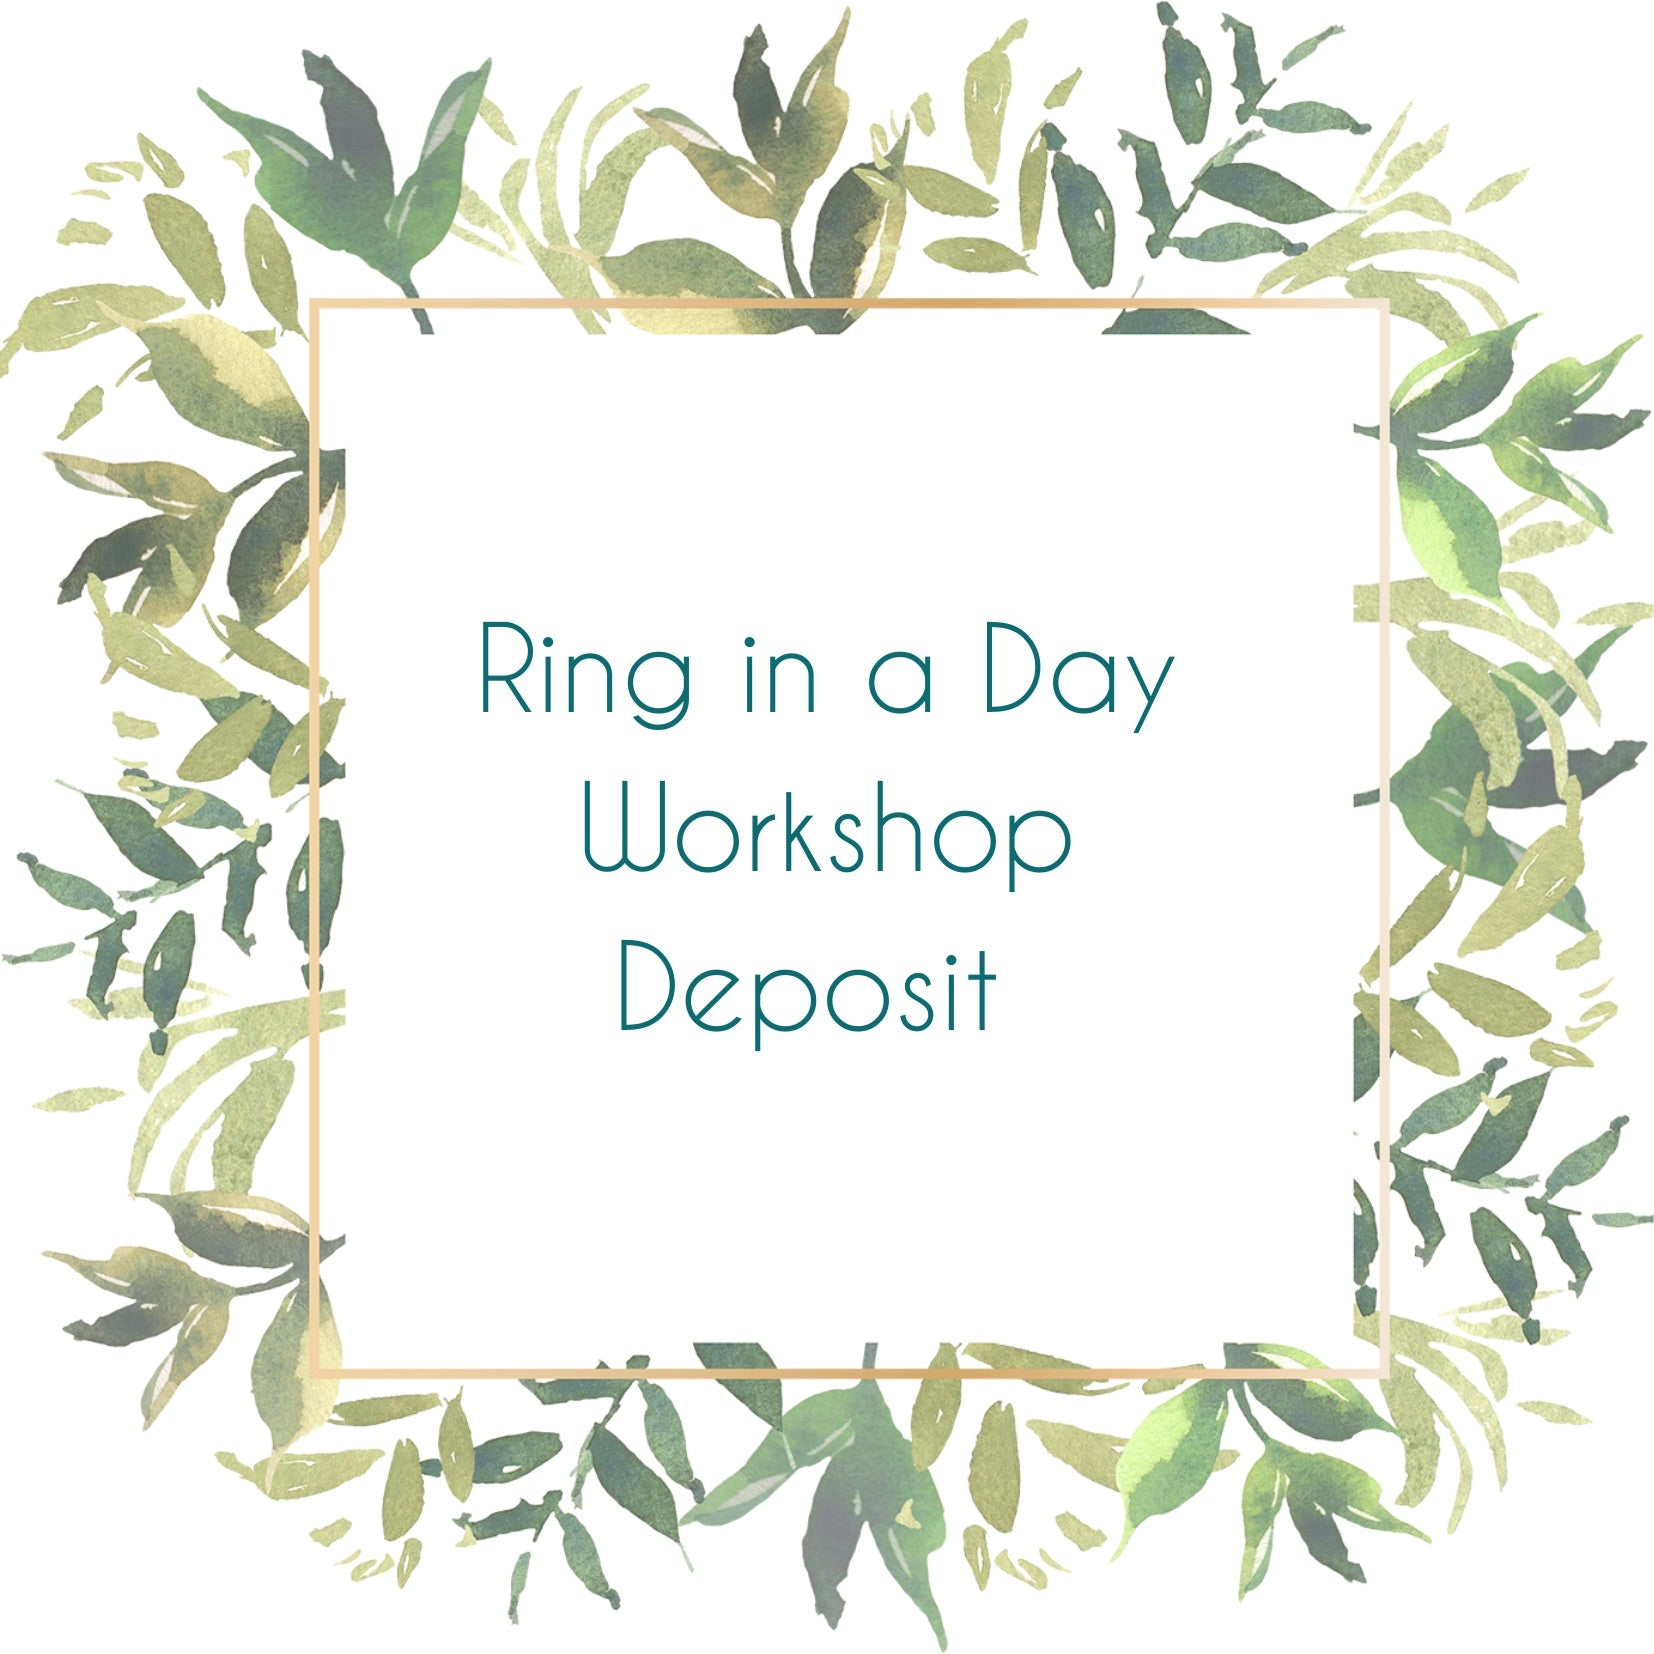 Jewellery Making Workshop - Deposit, Workshop, Small Dog Silver